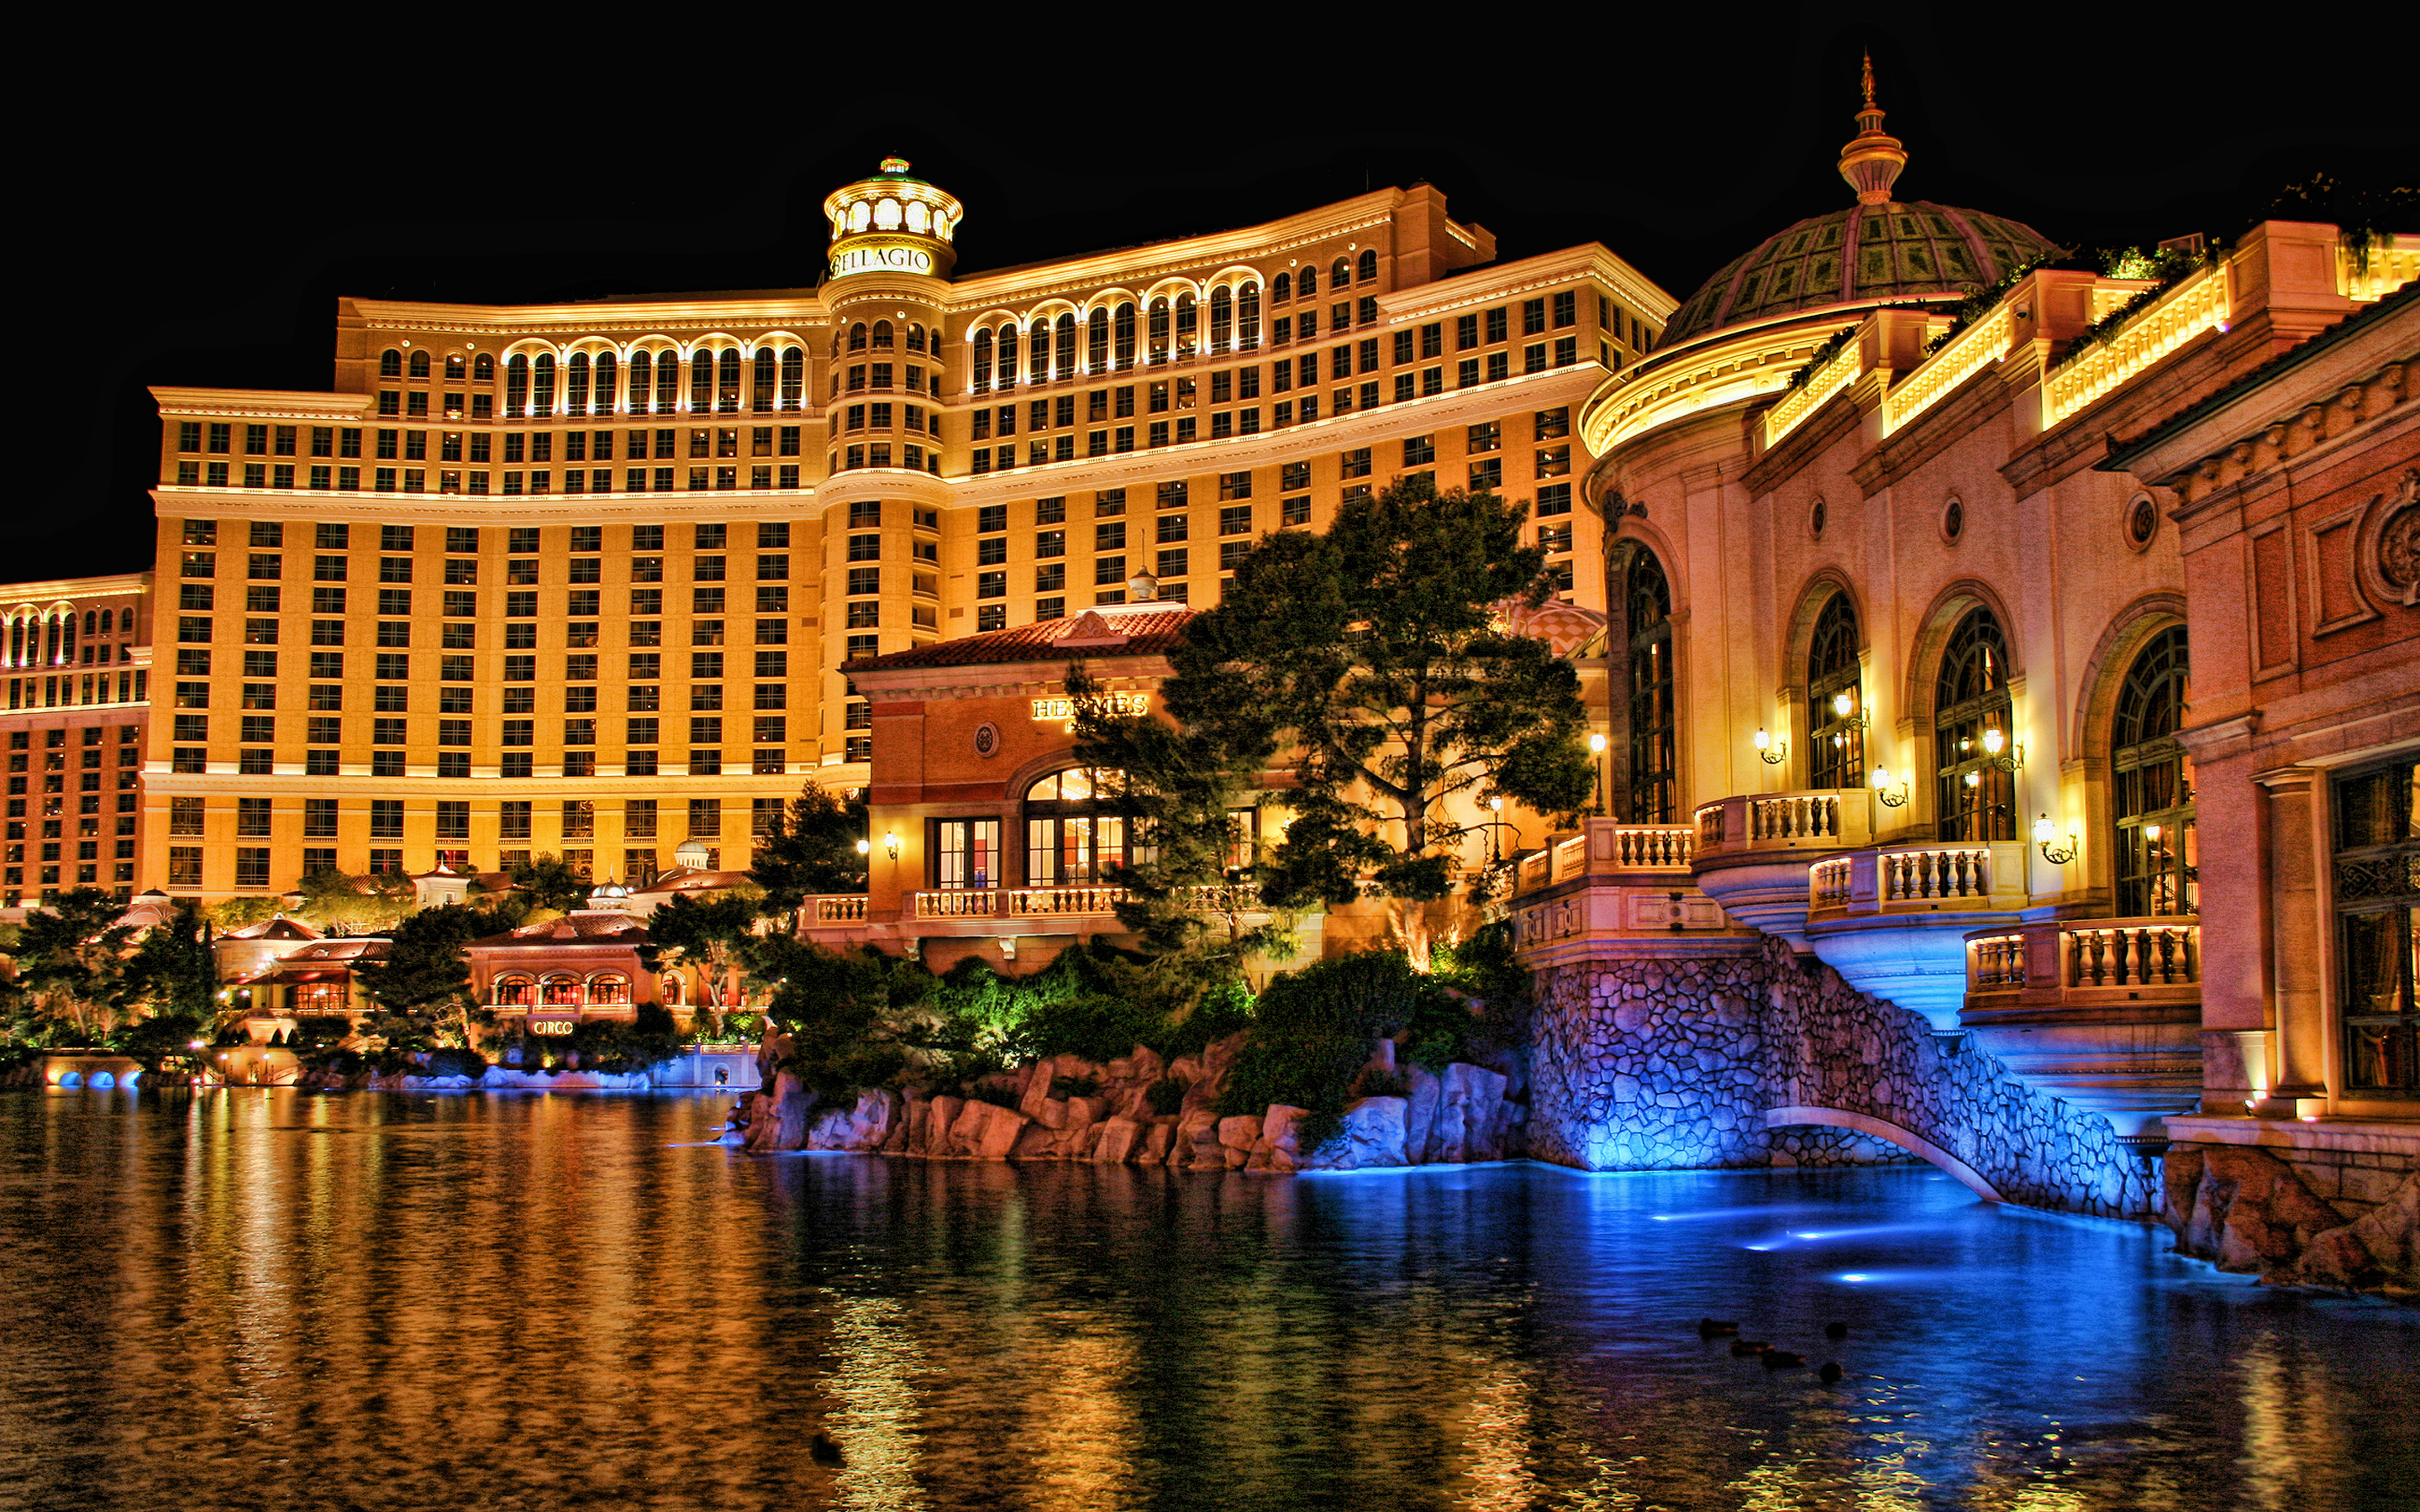 Luxury Bellagio Hotel And Casino Las Vegas, Nevada, North America ...